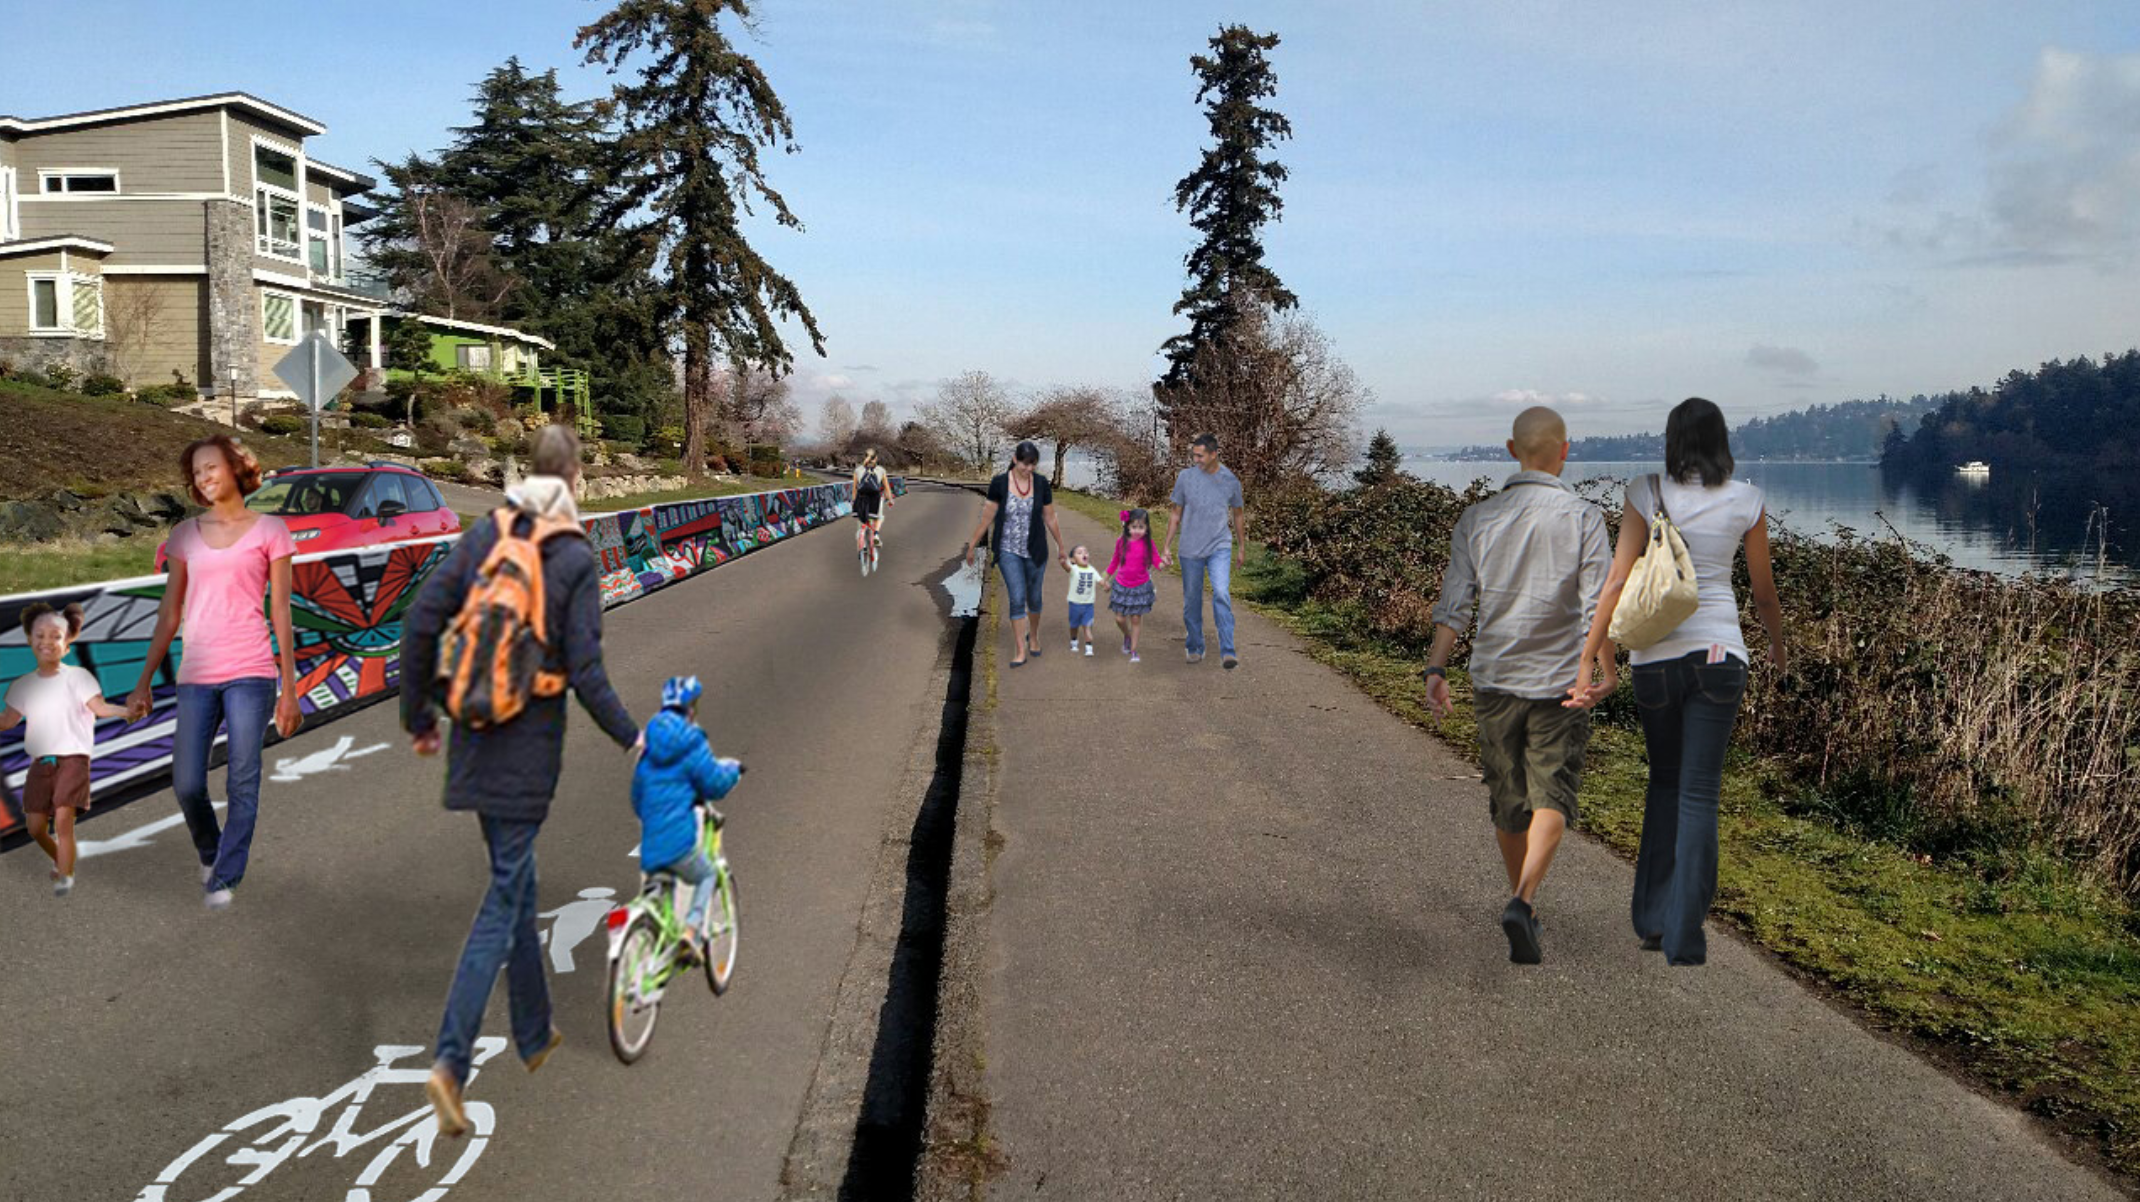 Seattle needs a permanently safe space for biking and walking on Lake Washington Blvd